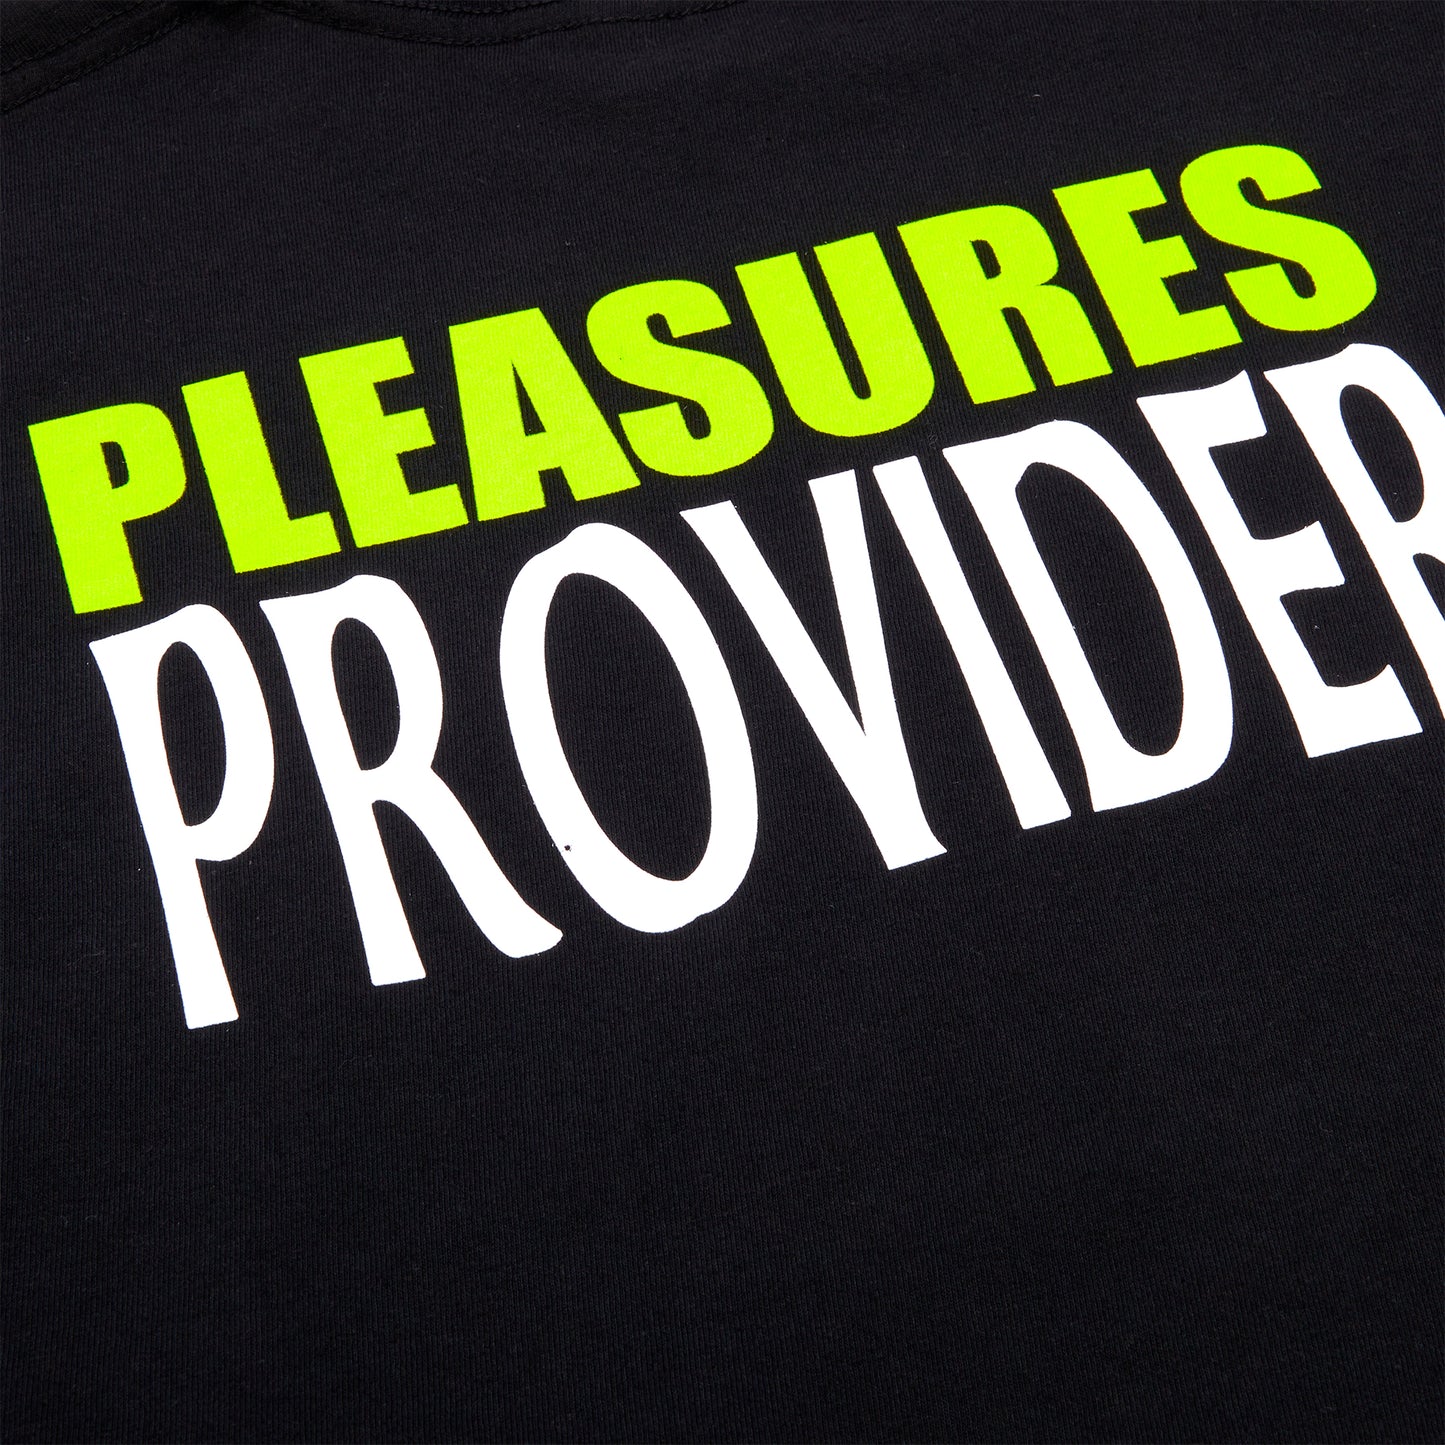 Pleasures x N.E.R.D Provider T-Shirt (Black)